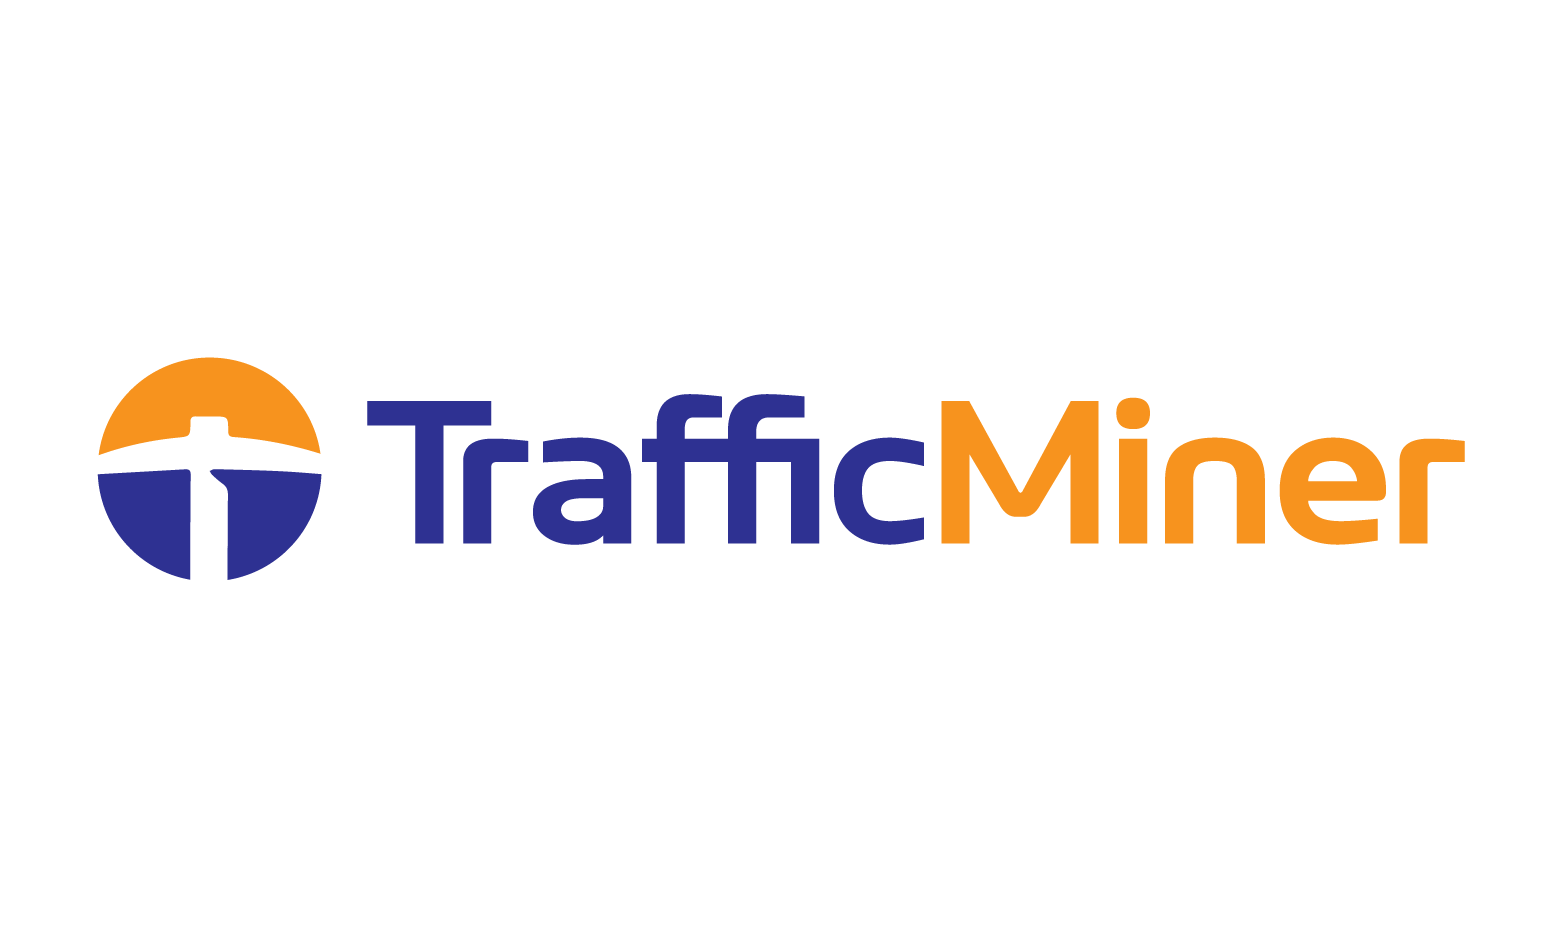 TrafficMiner.com - Creative brandable domain for sale